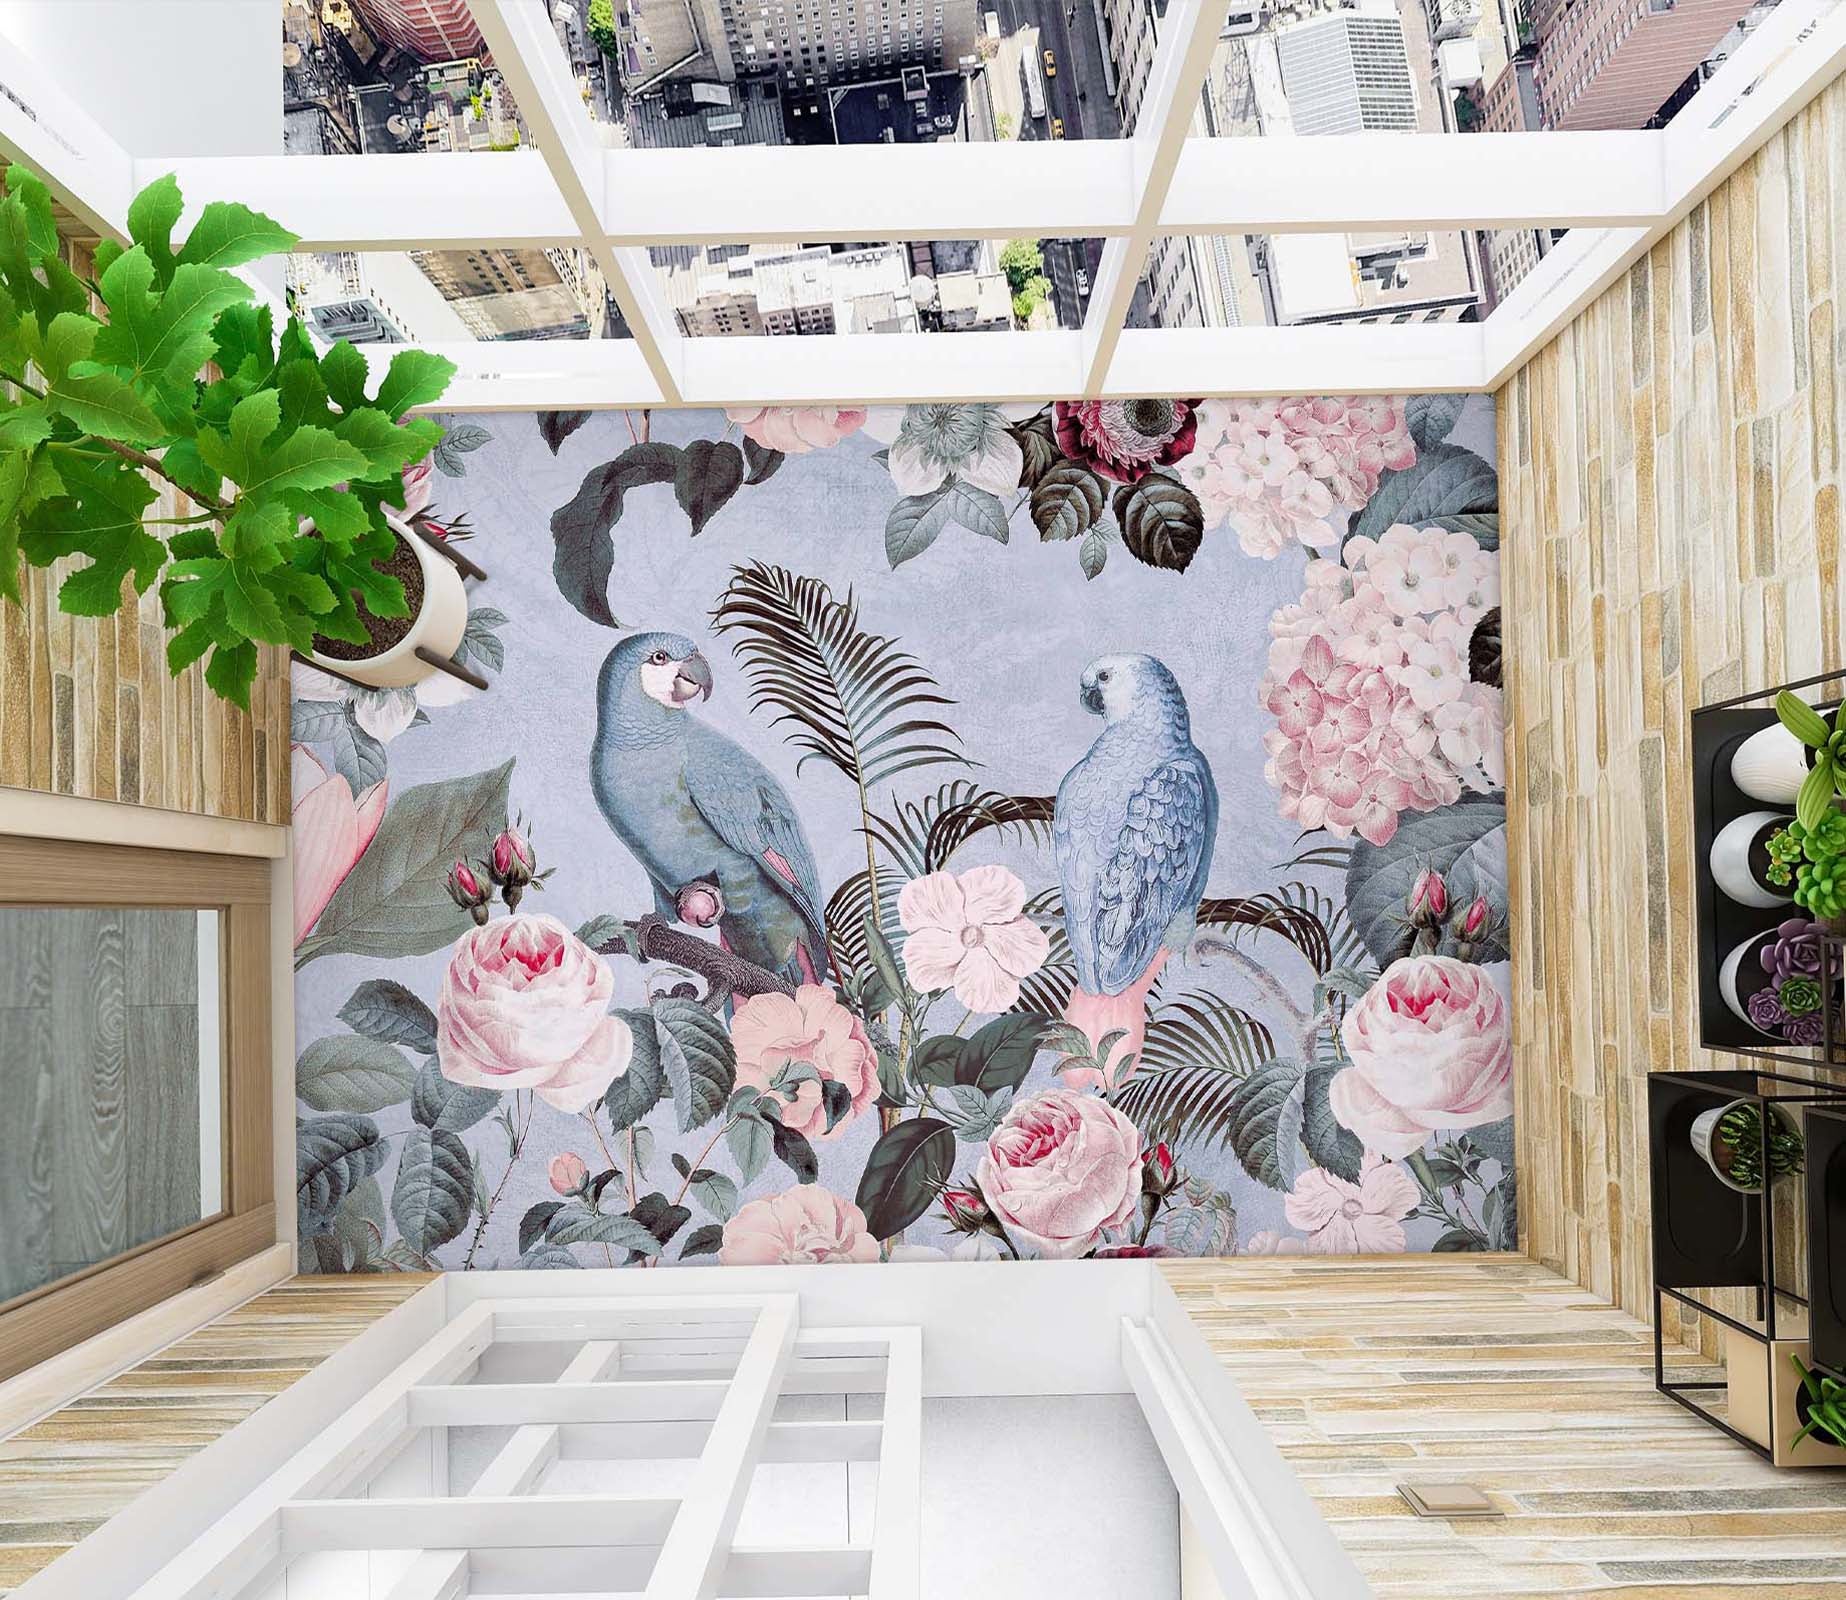 3D Parrot Flower Bush 104158 Andrea Haase Floor Mural  Wallpaper Murals Self-Adhesive Removable Print Epoxy